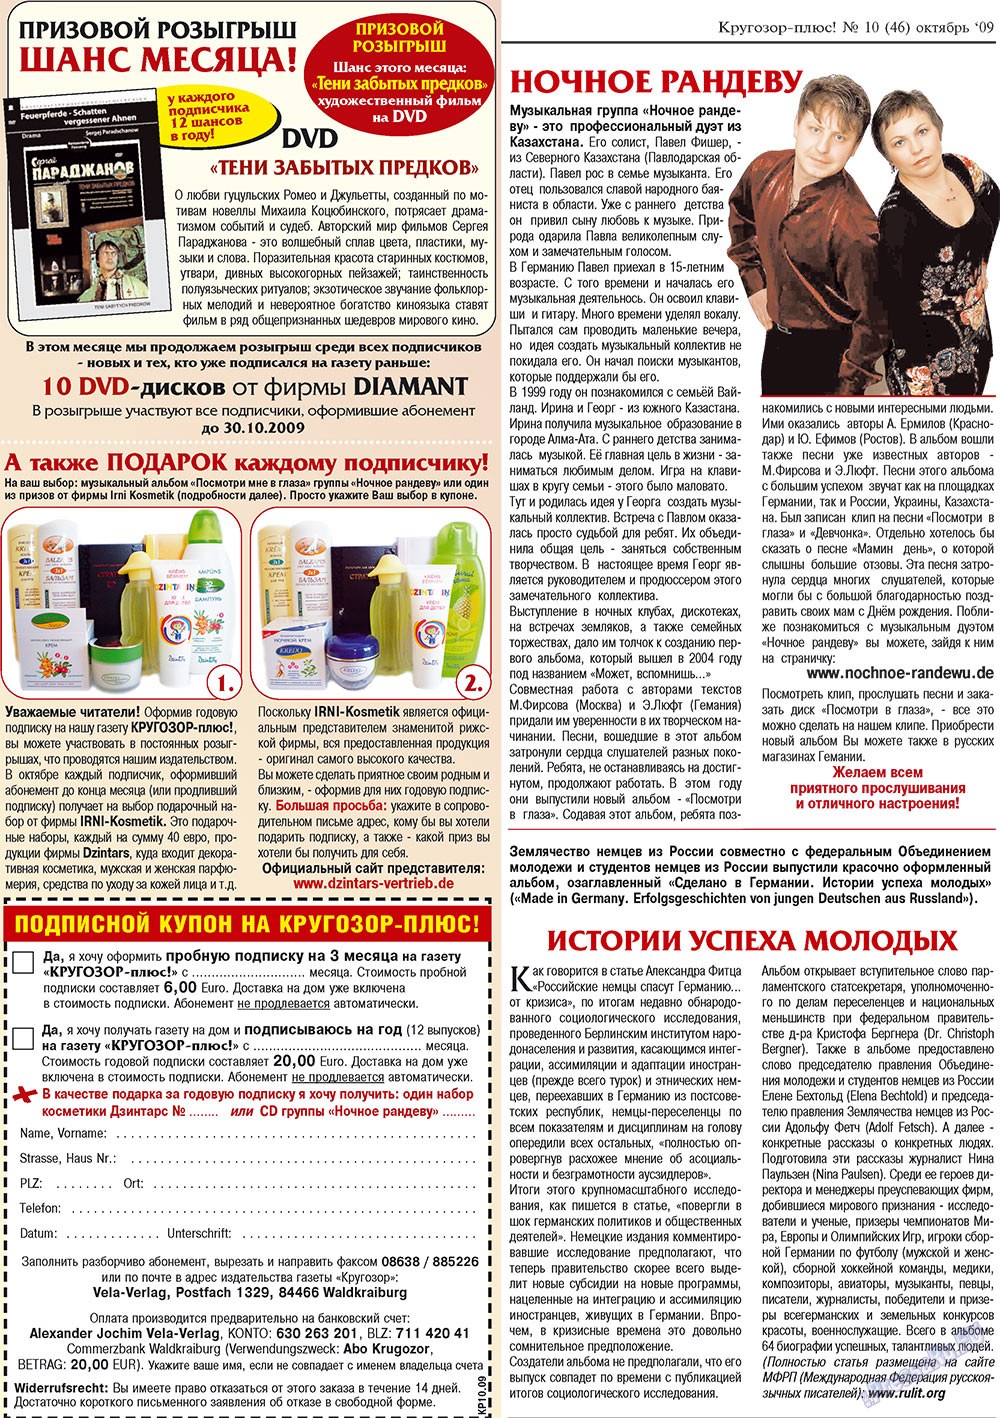 Кругозор плюс! (газета). 2009 год, номер 10, стр. 56